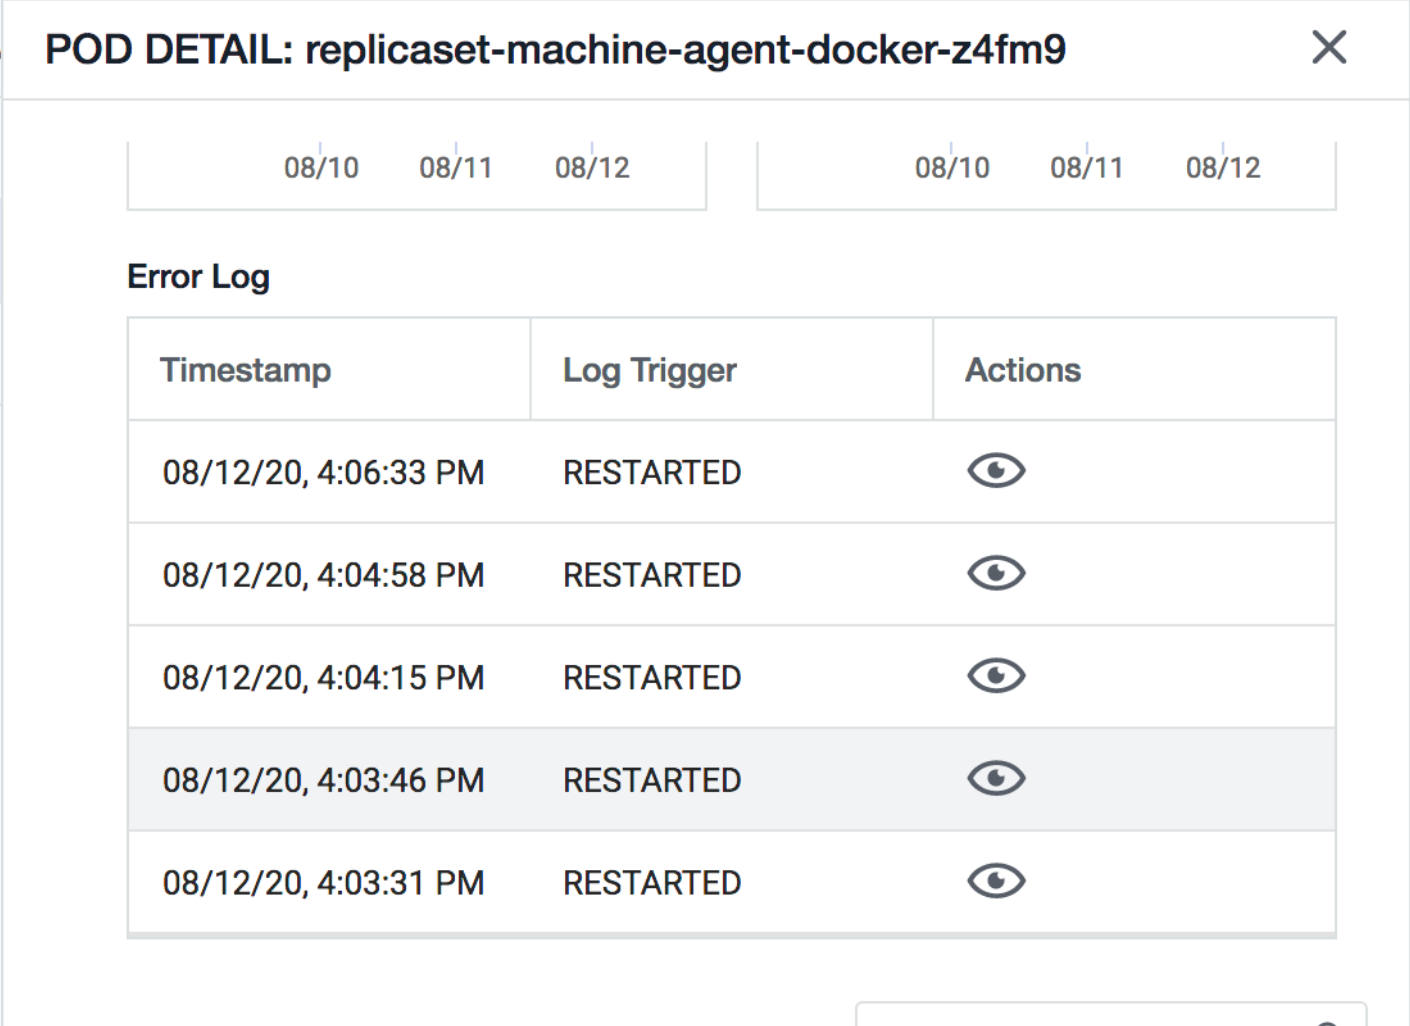 Error Log on Pod Details page includes timestamp and status of log trigger